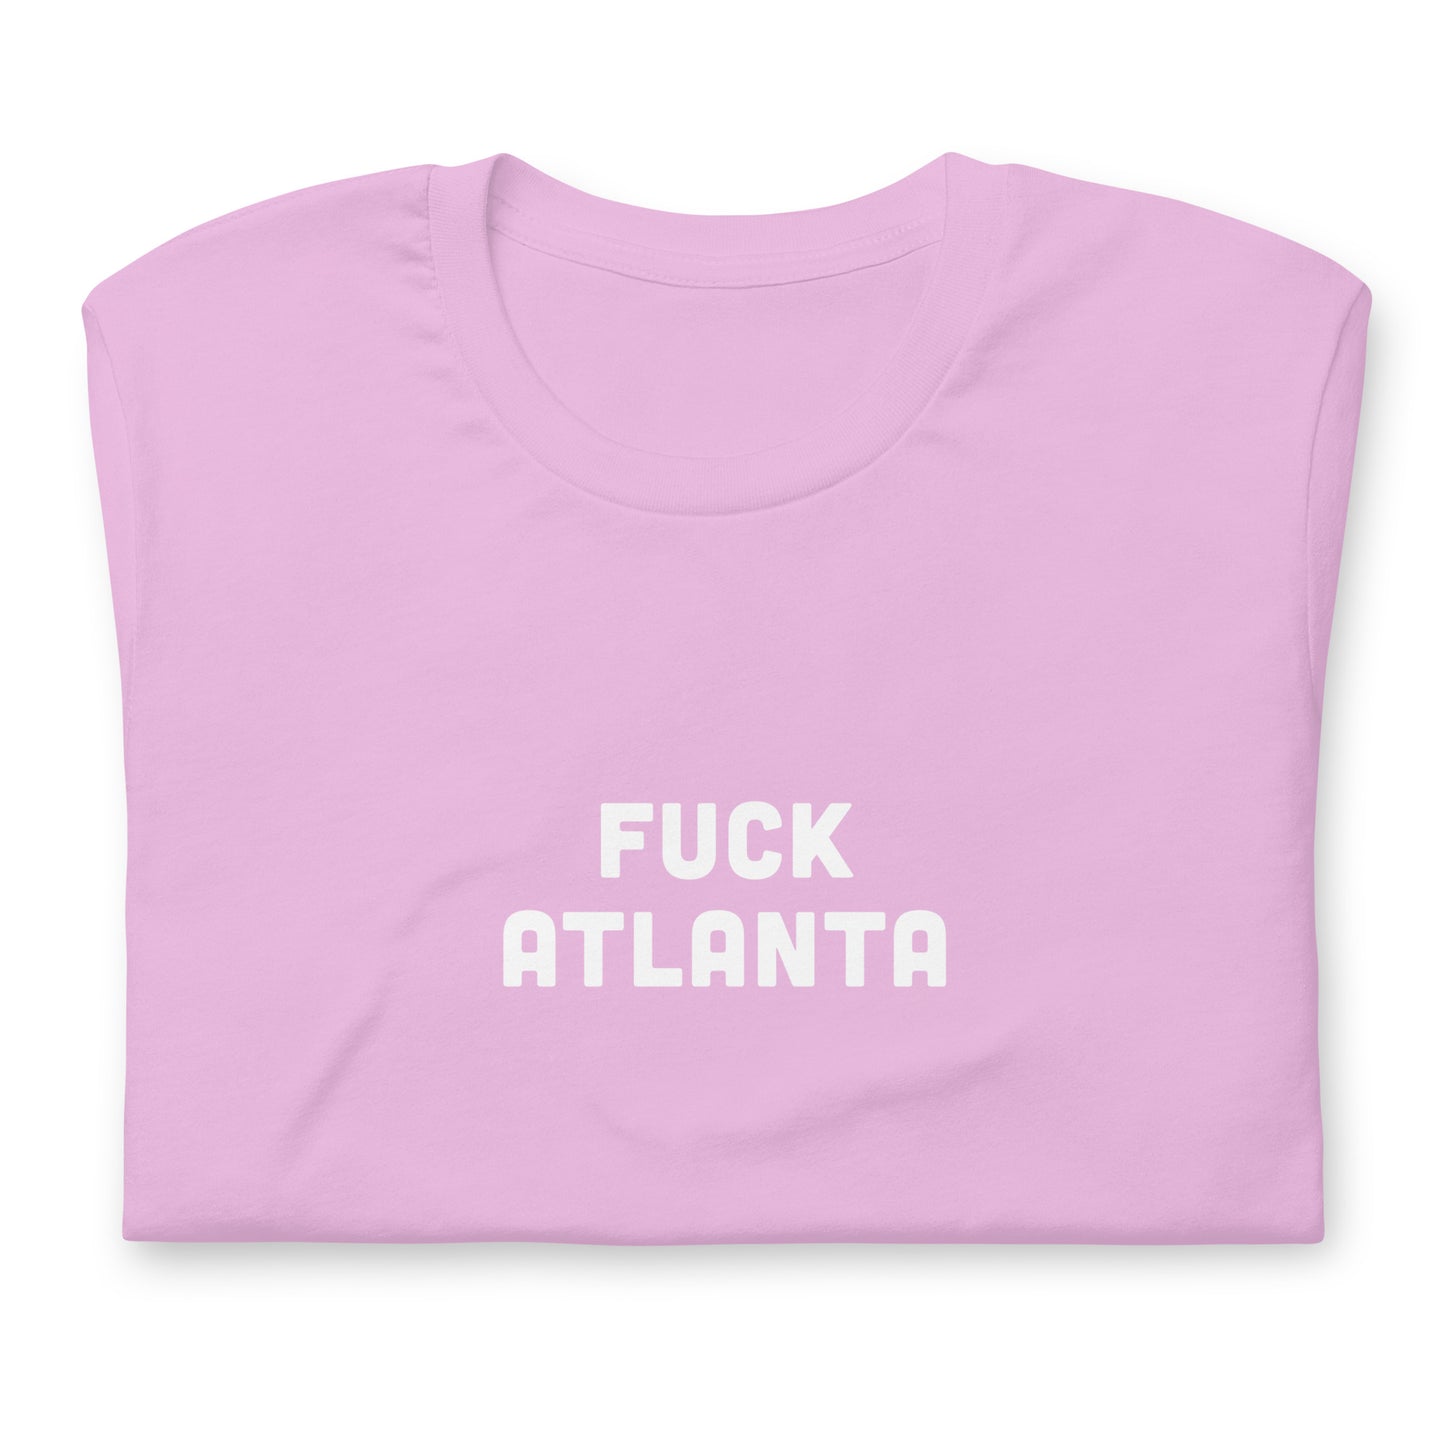 Fuck Atlanta T-Shirt Size M Color Asphalt